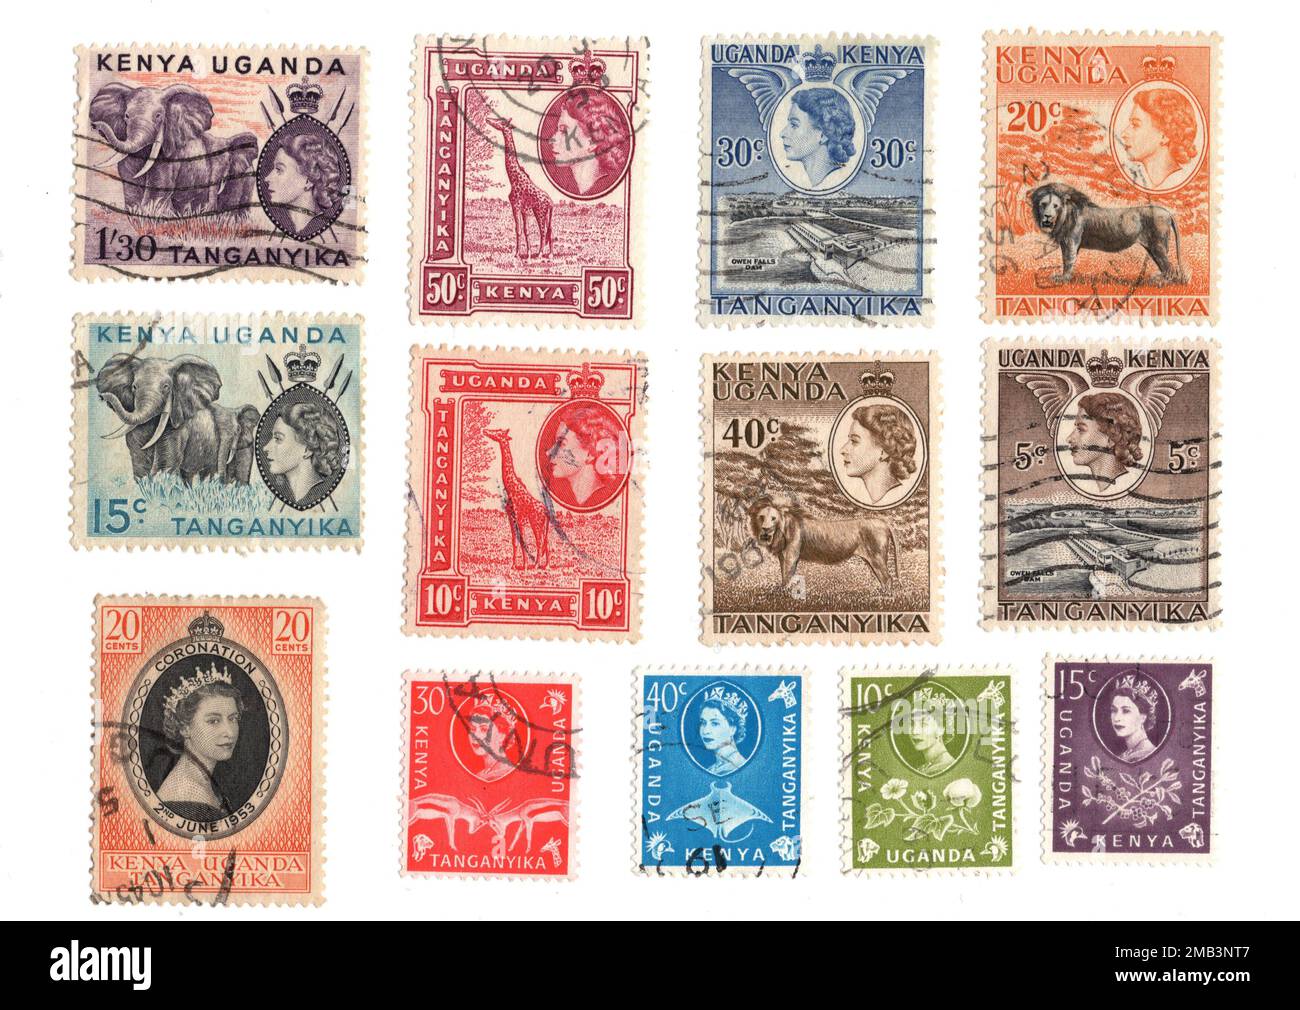 Vintage postage stamps from Kenya, Uganda and Tanganyika on a white background. Stock Photo